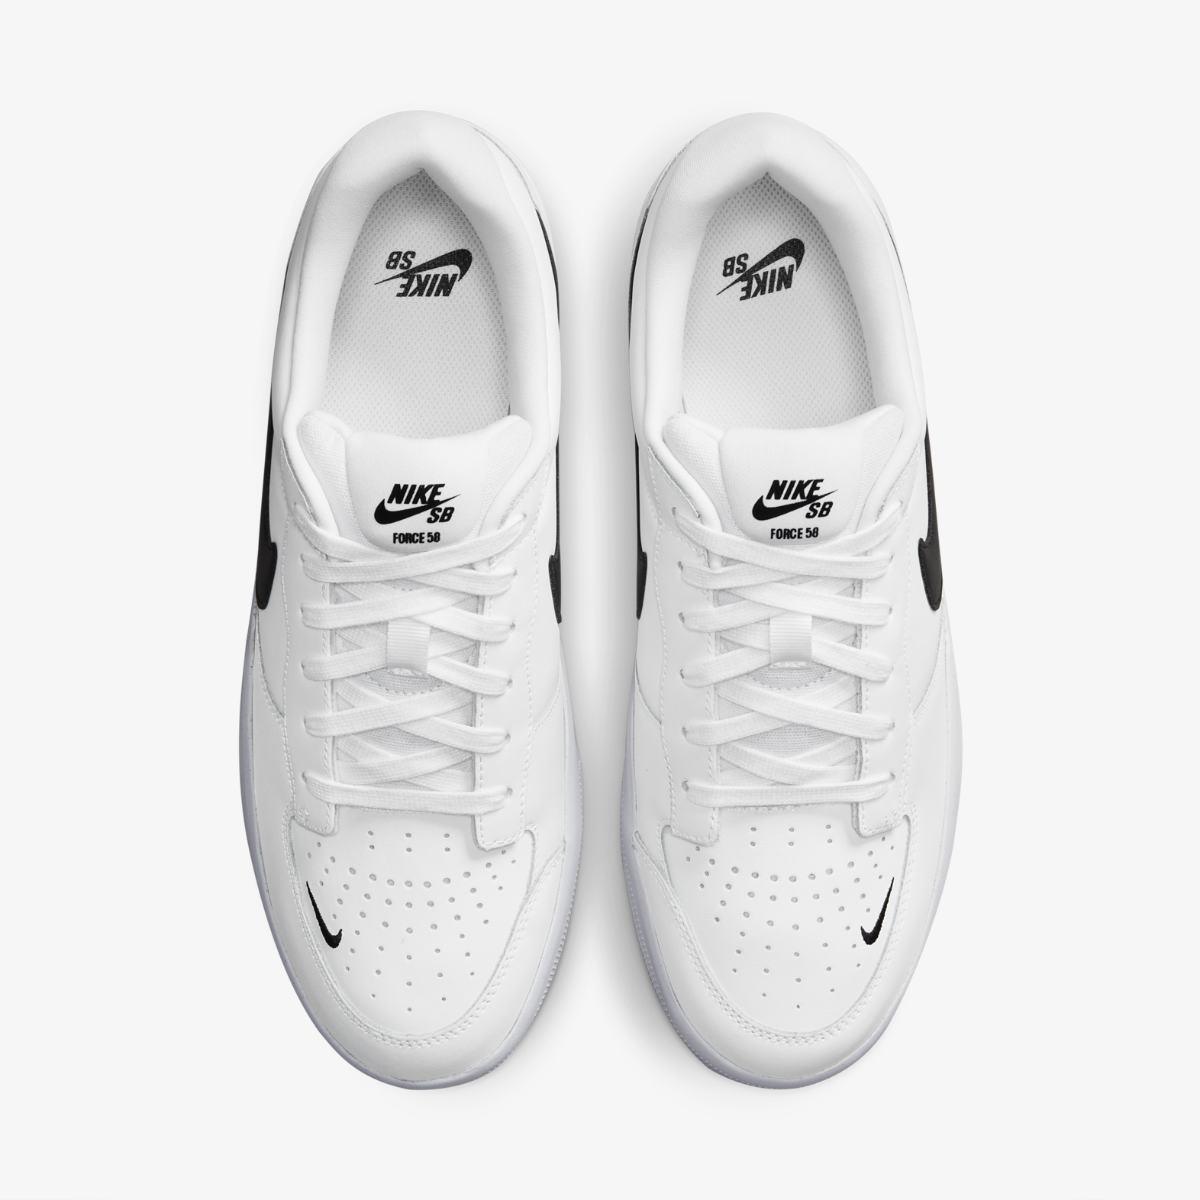 Кроссовки Nike SB Force 58 Premium